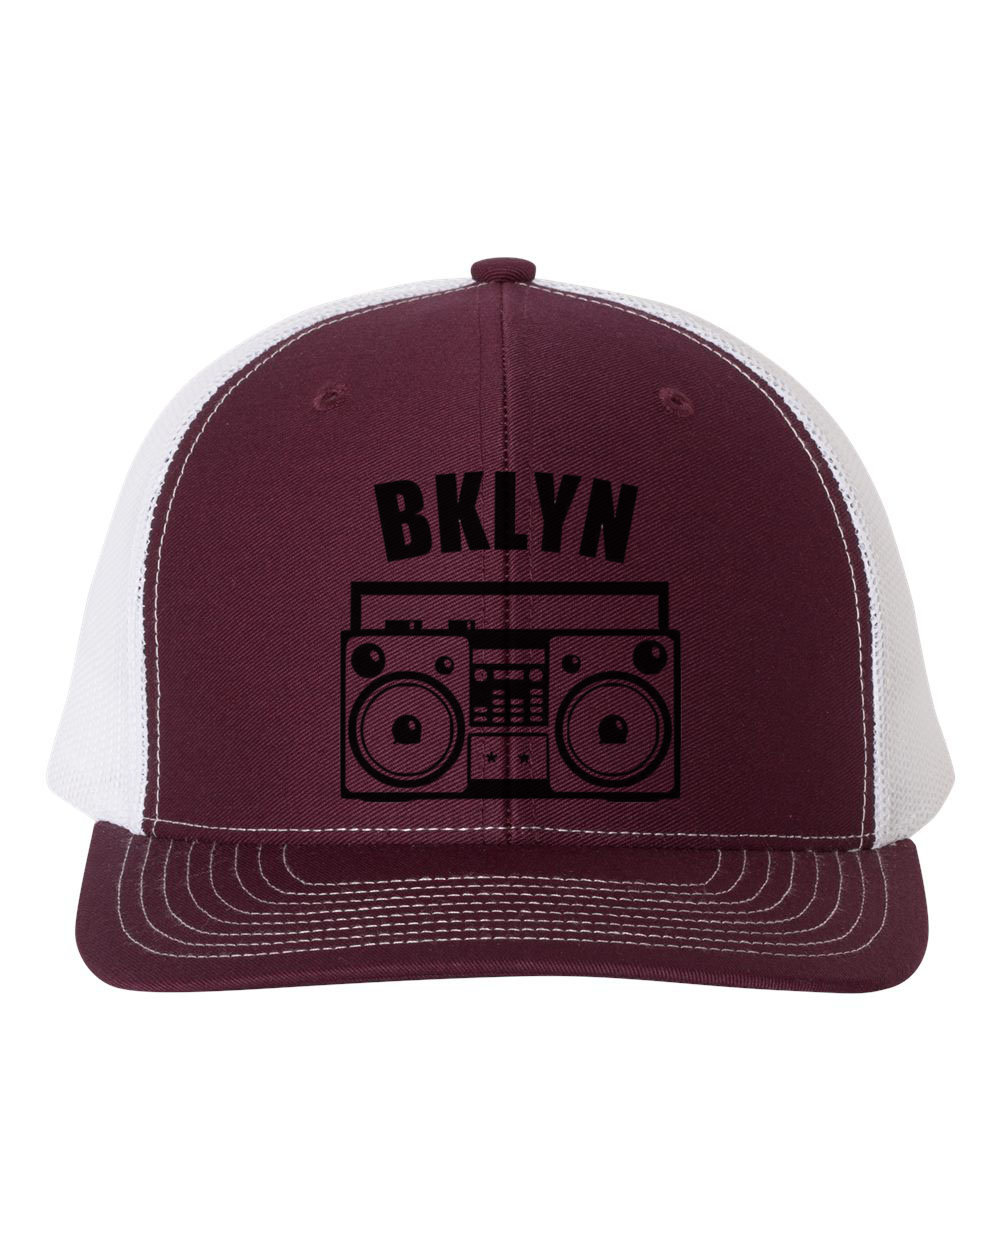 Brooklyn Hat, BKLYN, Boombox Hat, Retro Hat, Trucker Hat, Brooklyn Snapback, New York Hat, Adjustable Cap, Bklyn Hat, 90's Hat, Black Text, Maroon/White - image 1 of 1